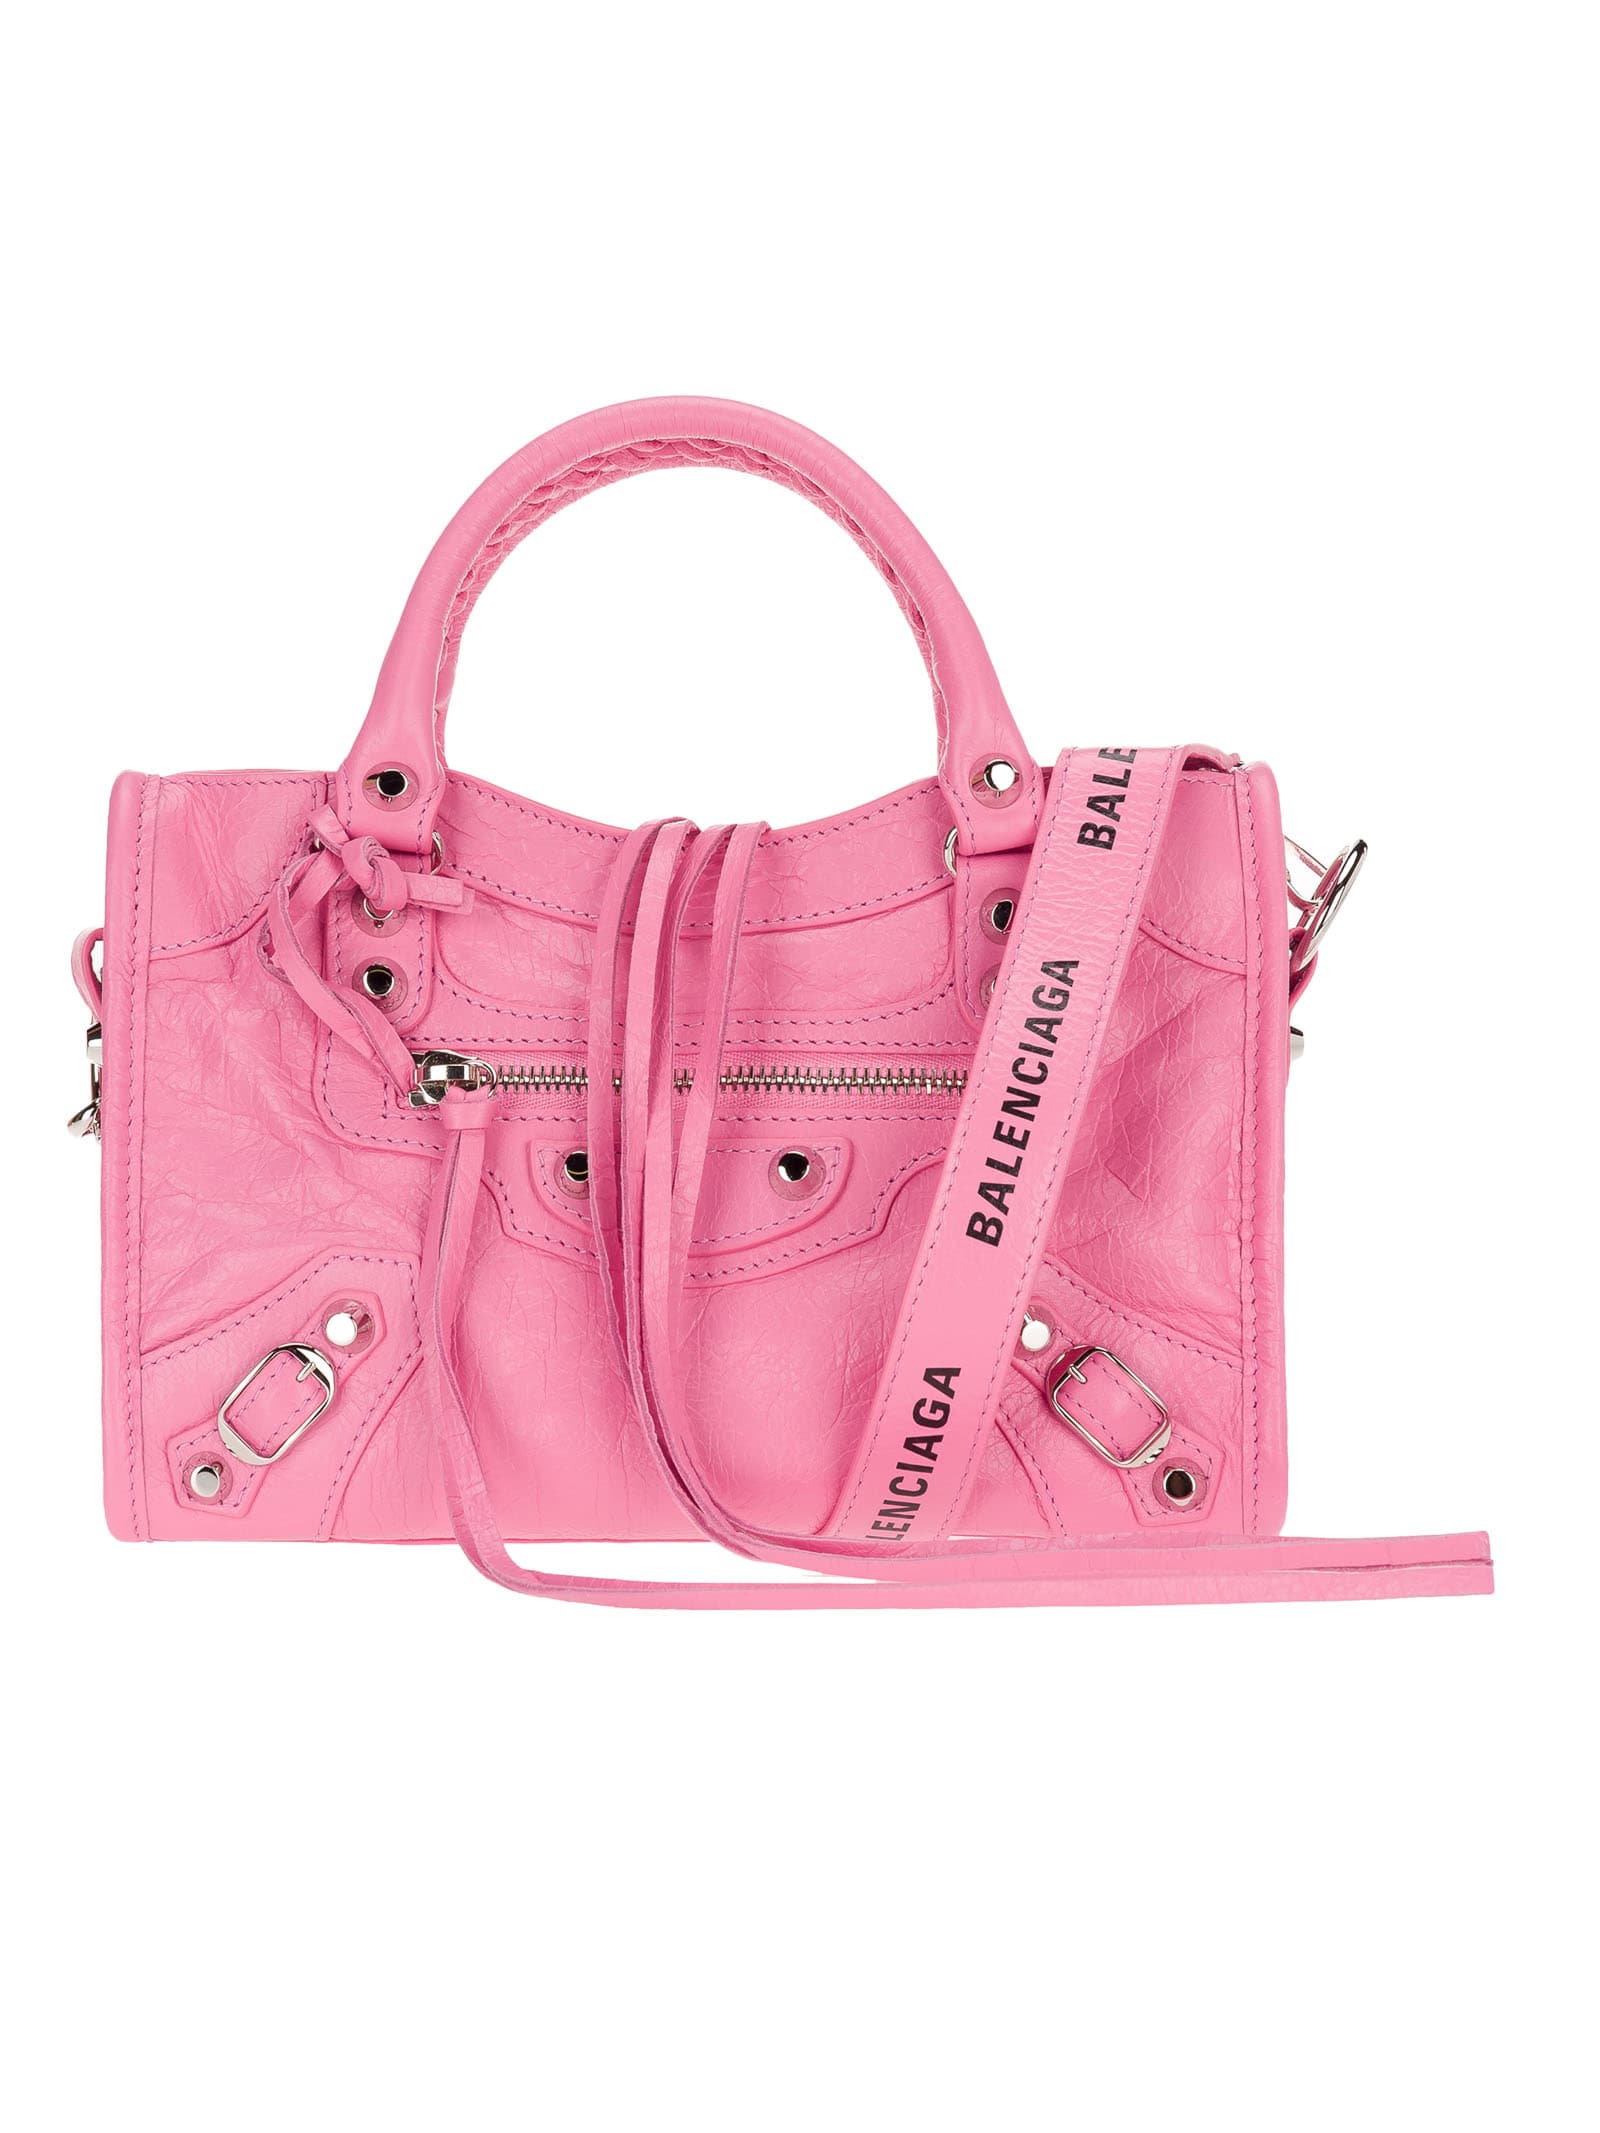 balenciaga city bag mini pink